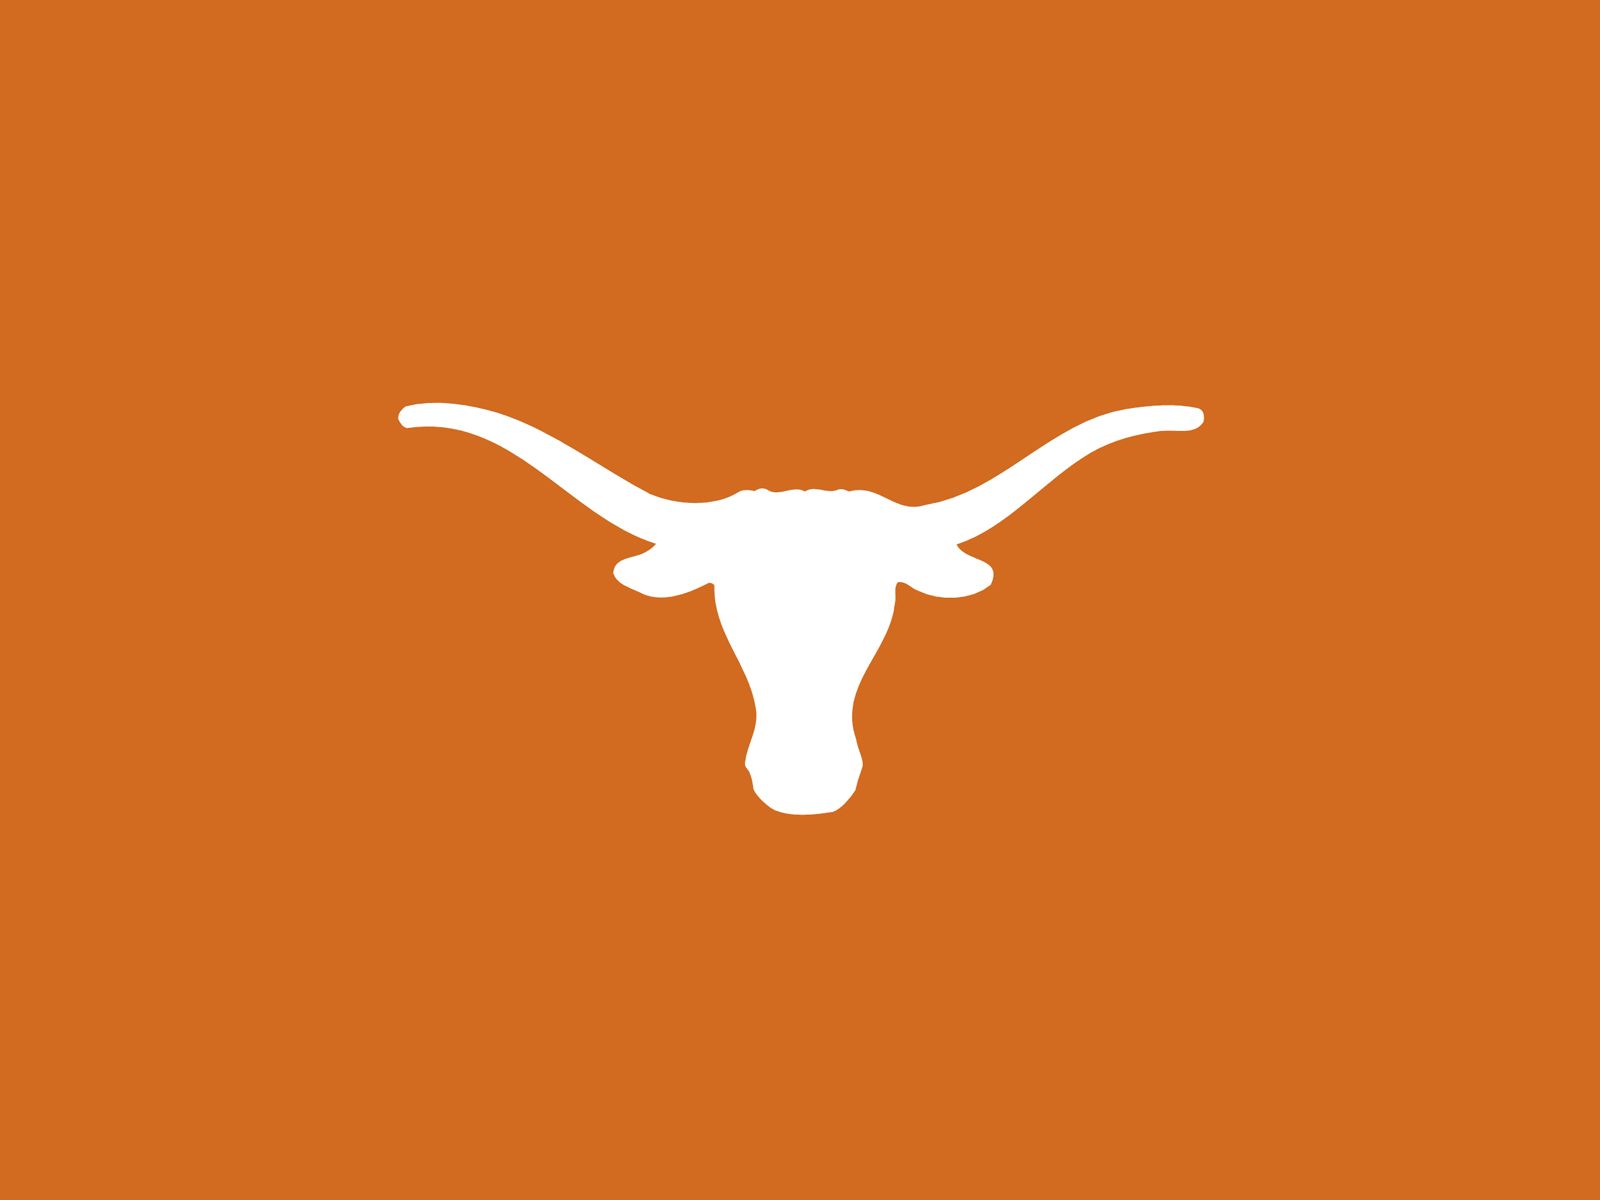 The Texas Longhorns logo on an orange background - Texas